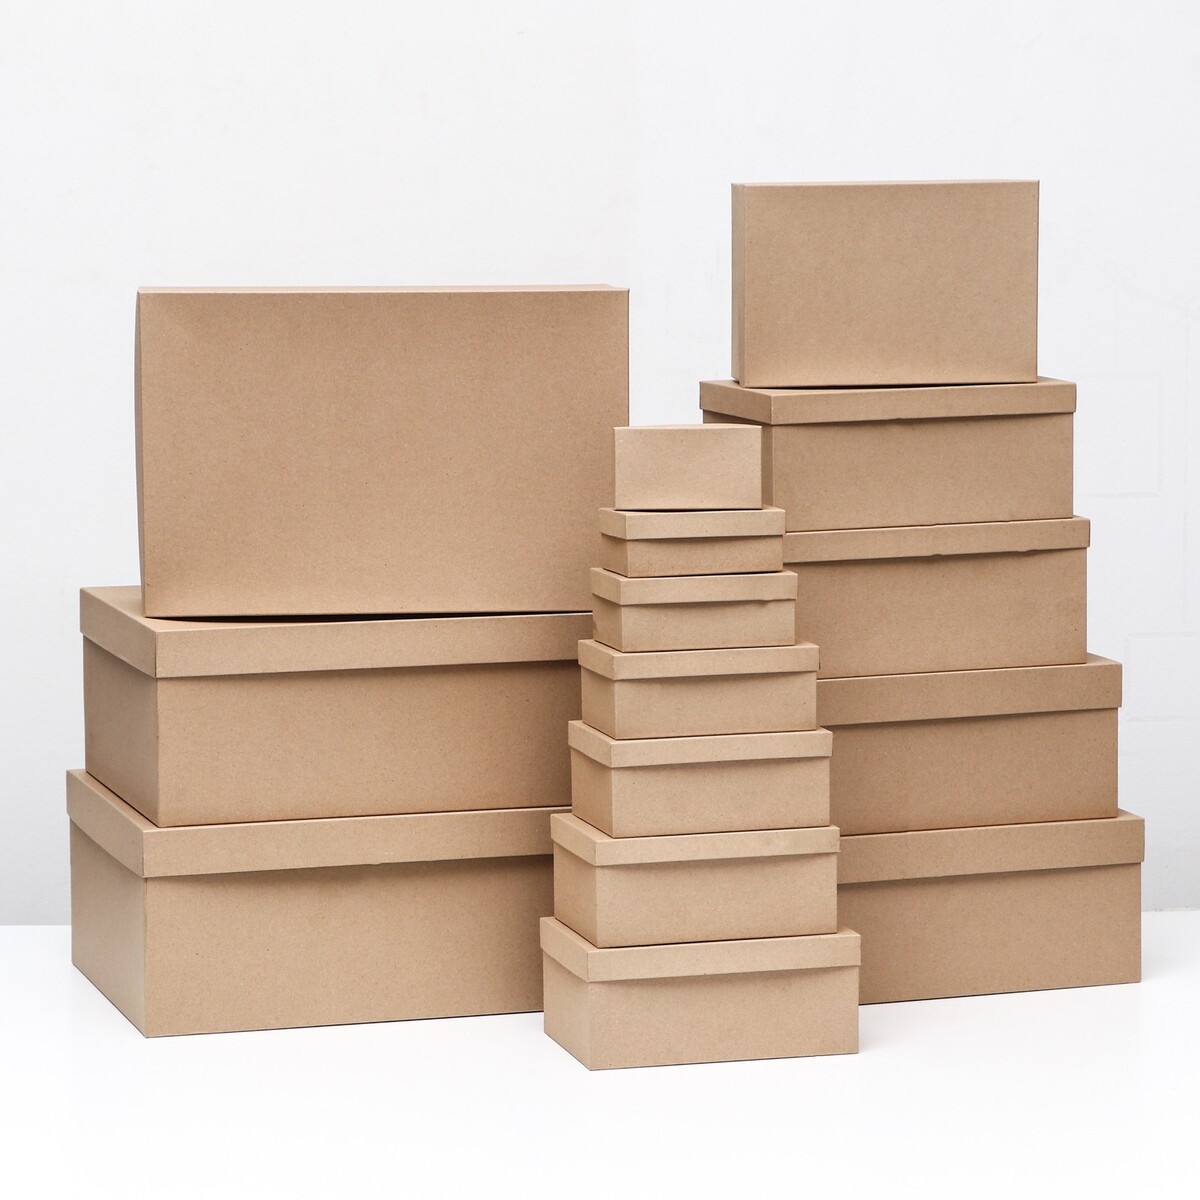 Набор коробок крафт однотонный 15в1 44 х 34 х 15,5 - 11 х 6 х 4 см пакет бумажный фасовочный крафт v образное дно 25 х 20 х 9 см набор 100 шт